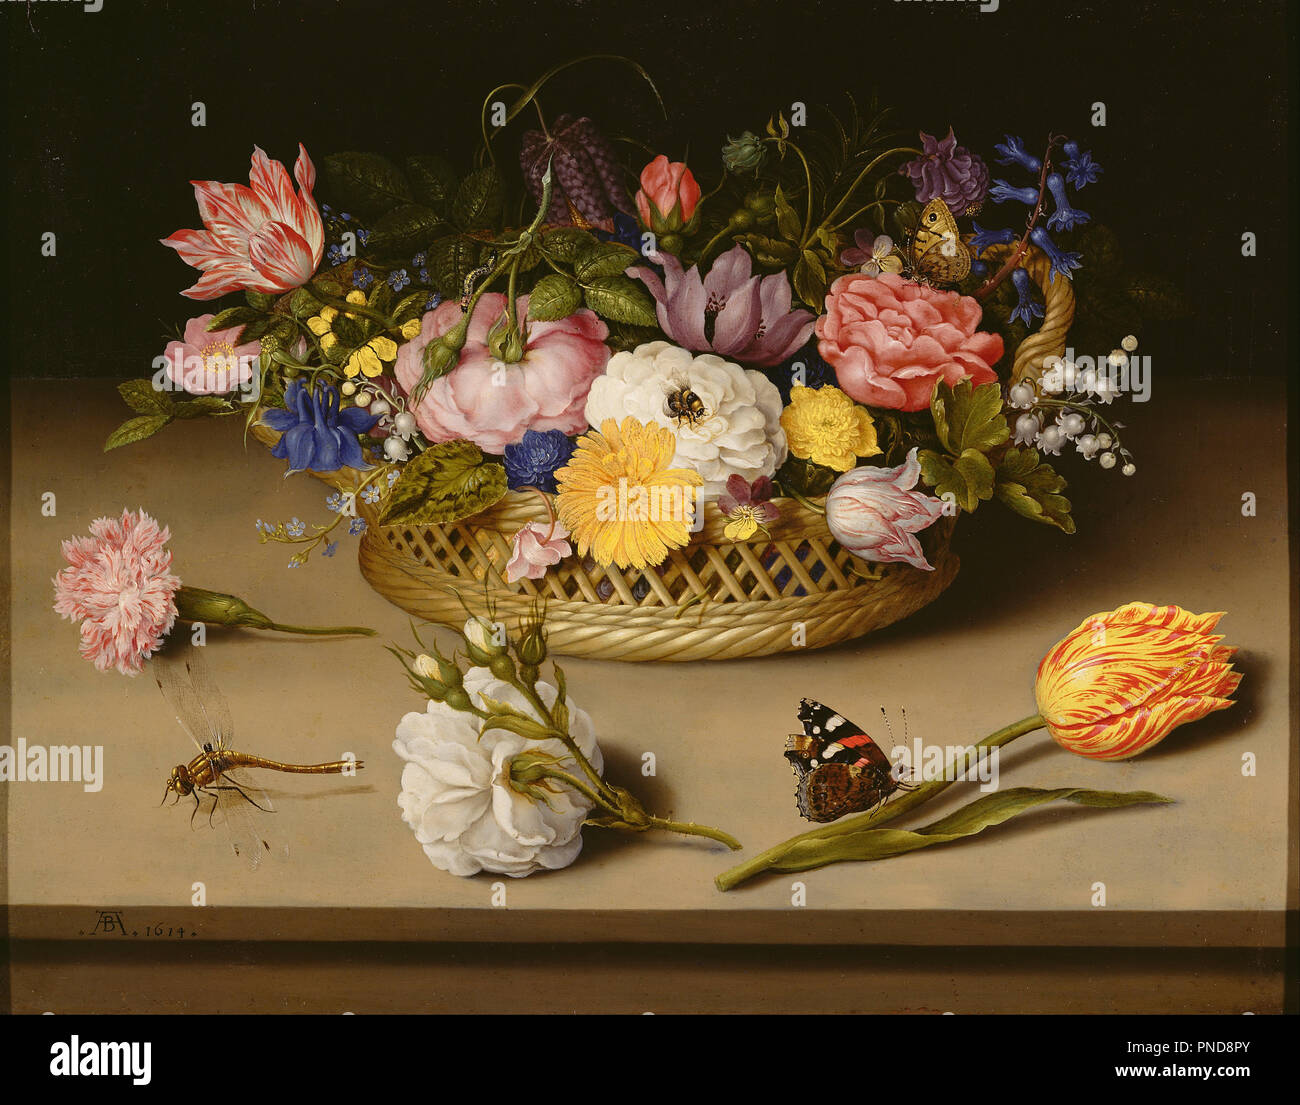 Flower still life. Date/Period: 1614. Painting. Oil on copper. Height: 30.5 cm (12 in); Width: 38.9 cm (15.3 in). Author: AMBROSIUS BOSSCHAERT. Bosschaert, Ambrosius, the Elder. Stock Photo